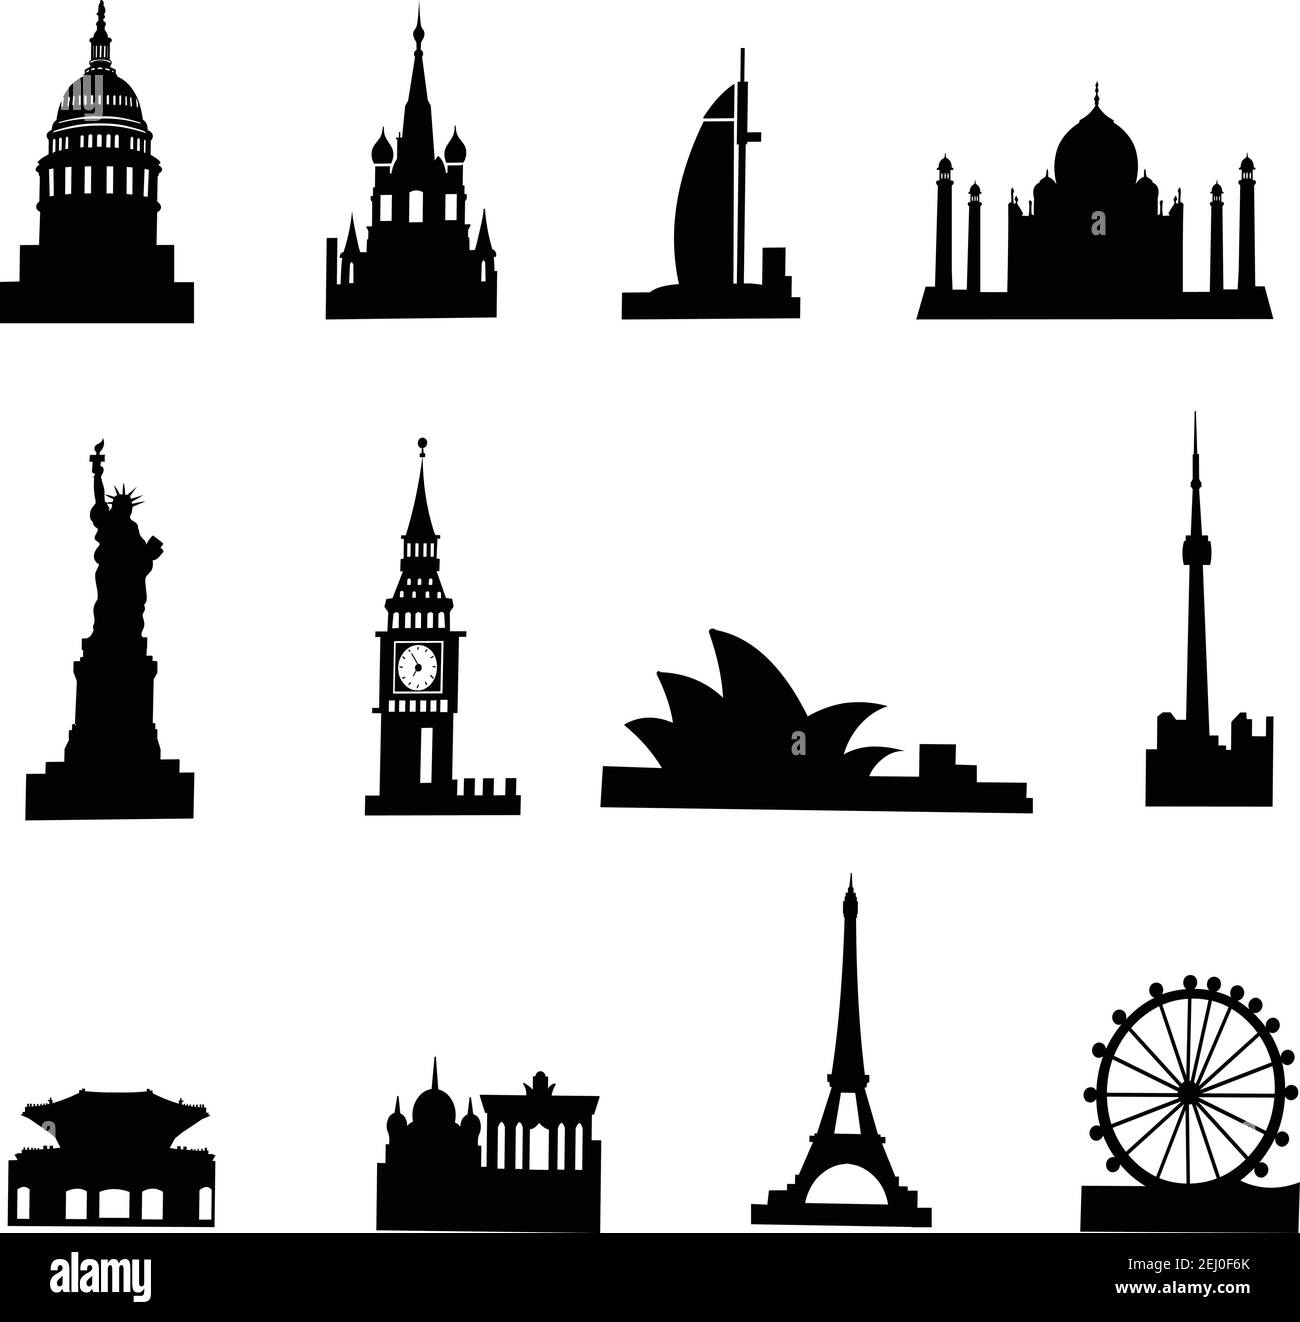 Travel Landmark Icons - Silhouette Vektor Stock Illustration isoliert in Weißer Hintergrund Stock Vektor